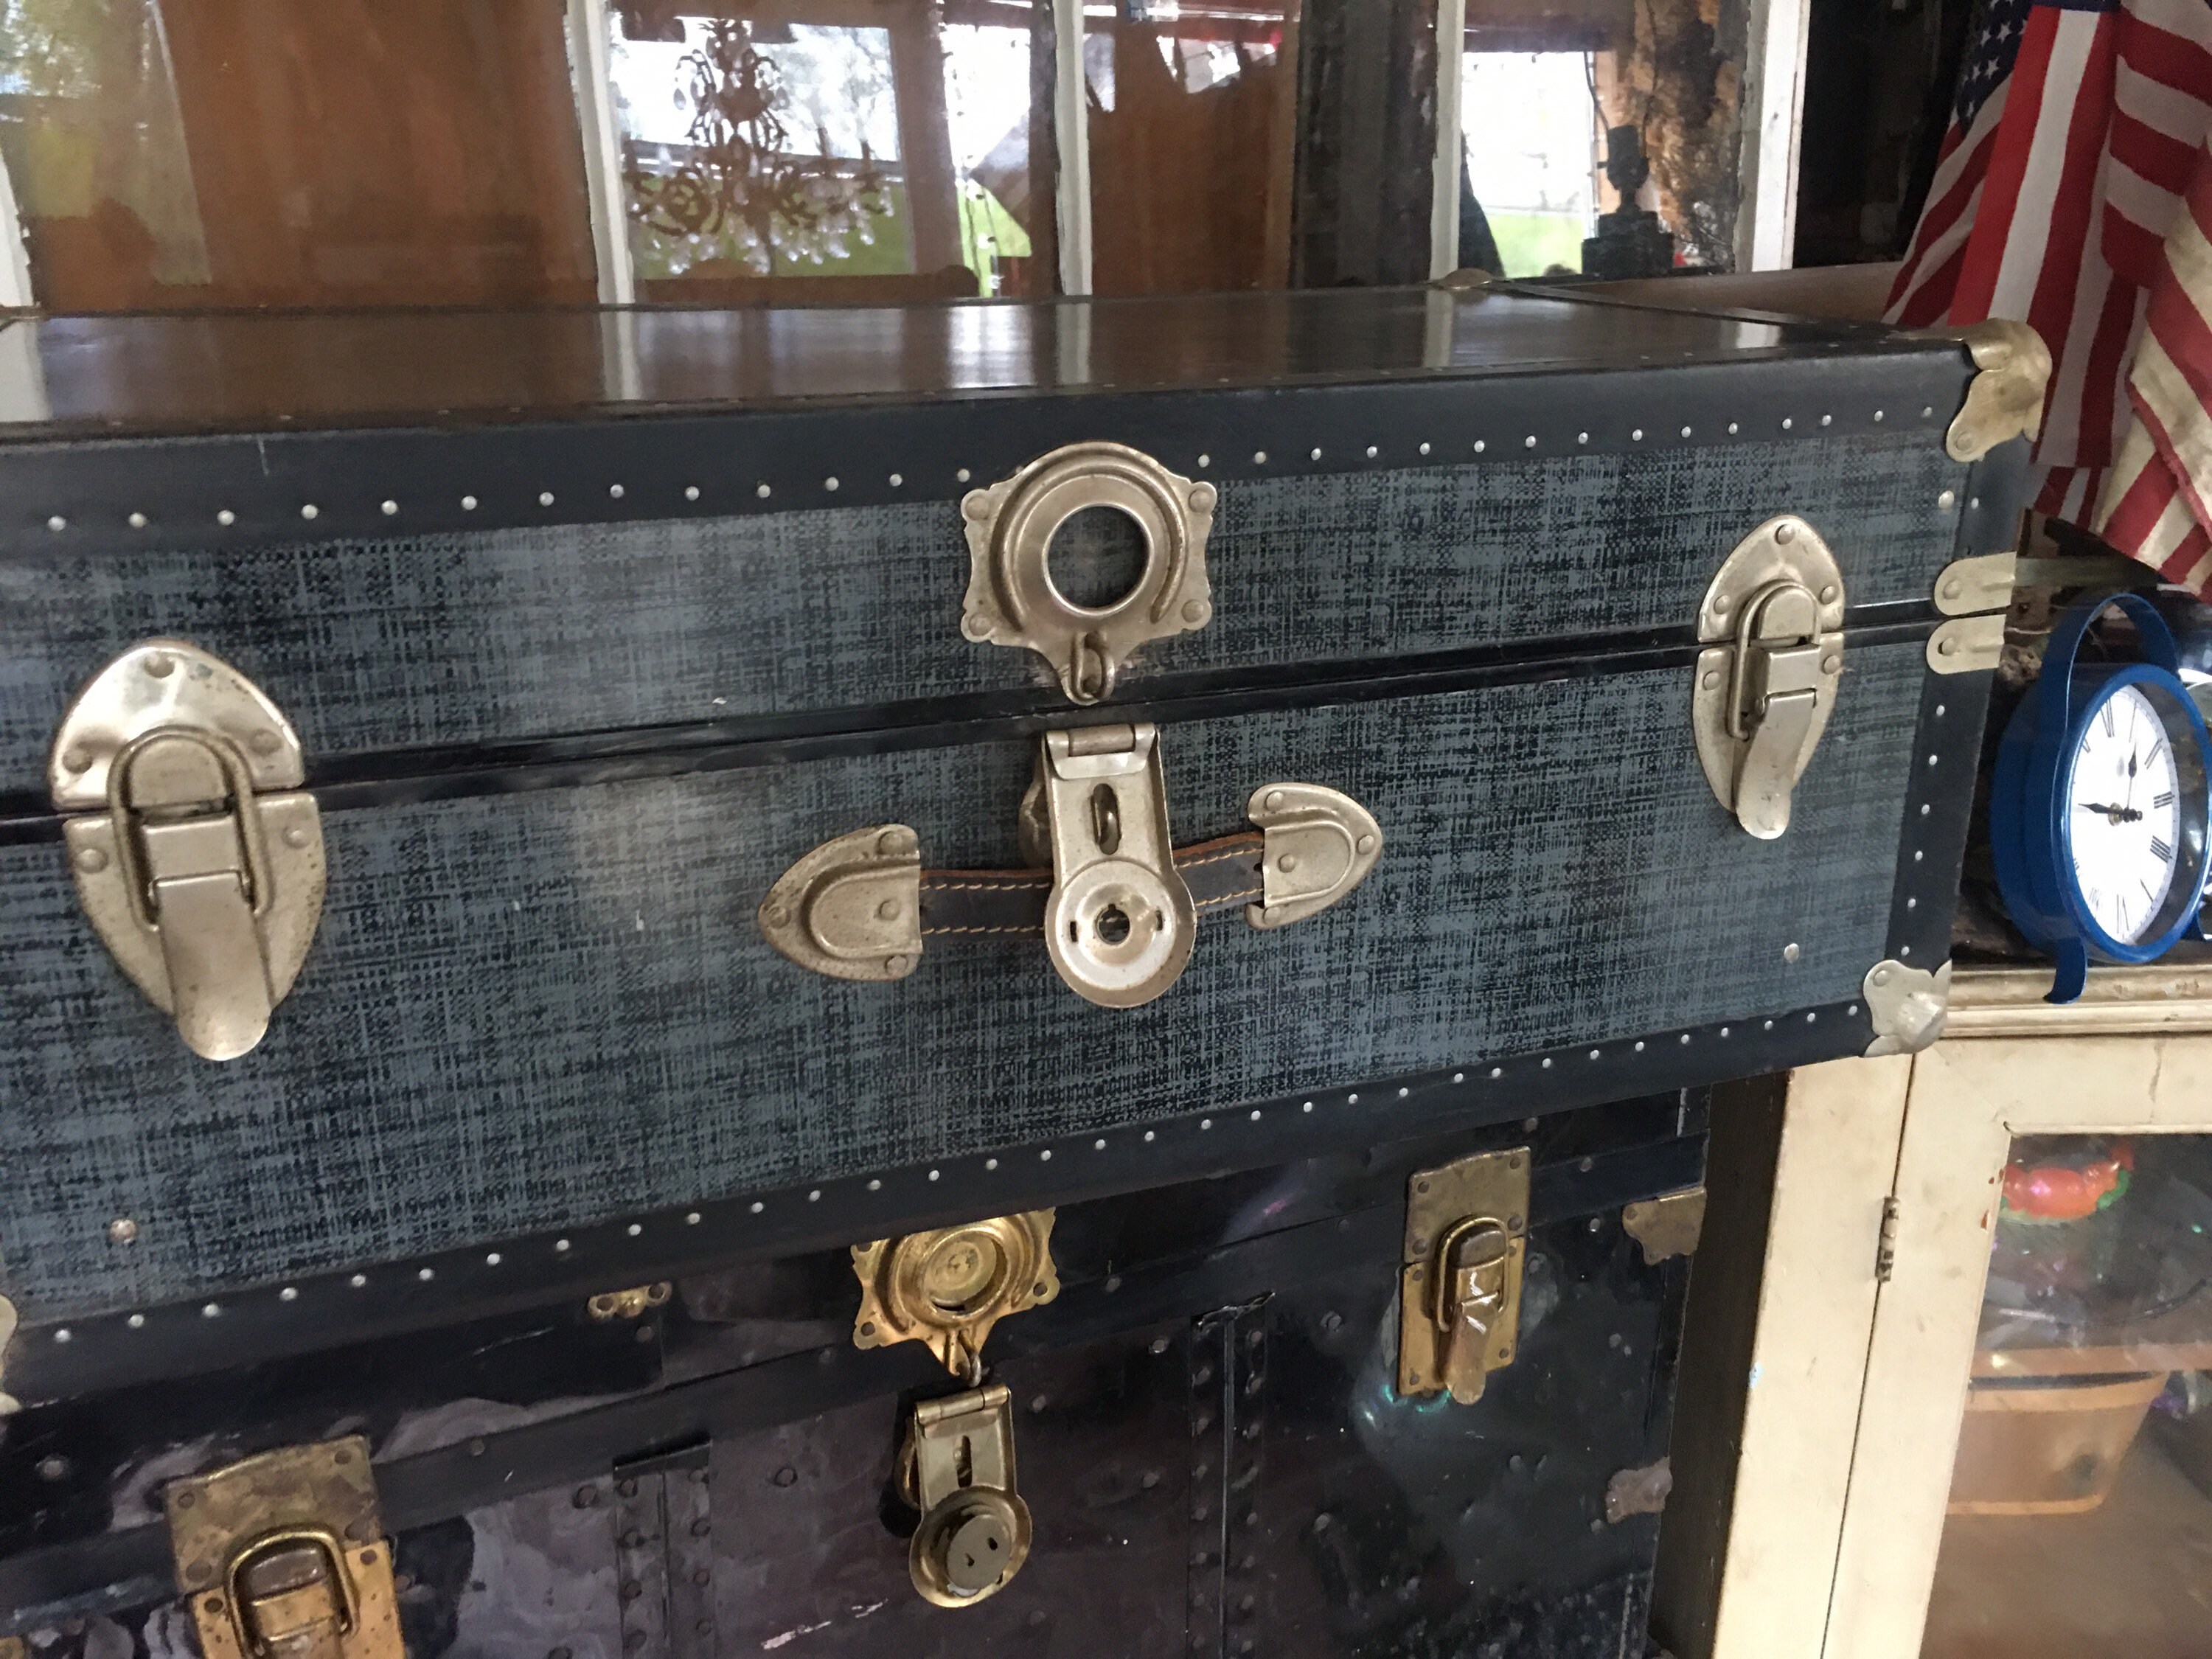 275 Antique Trunks Foot Locker For Sale, Restored Antique Trunks